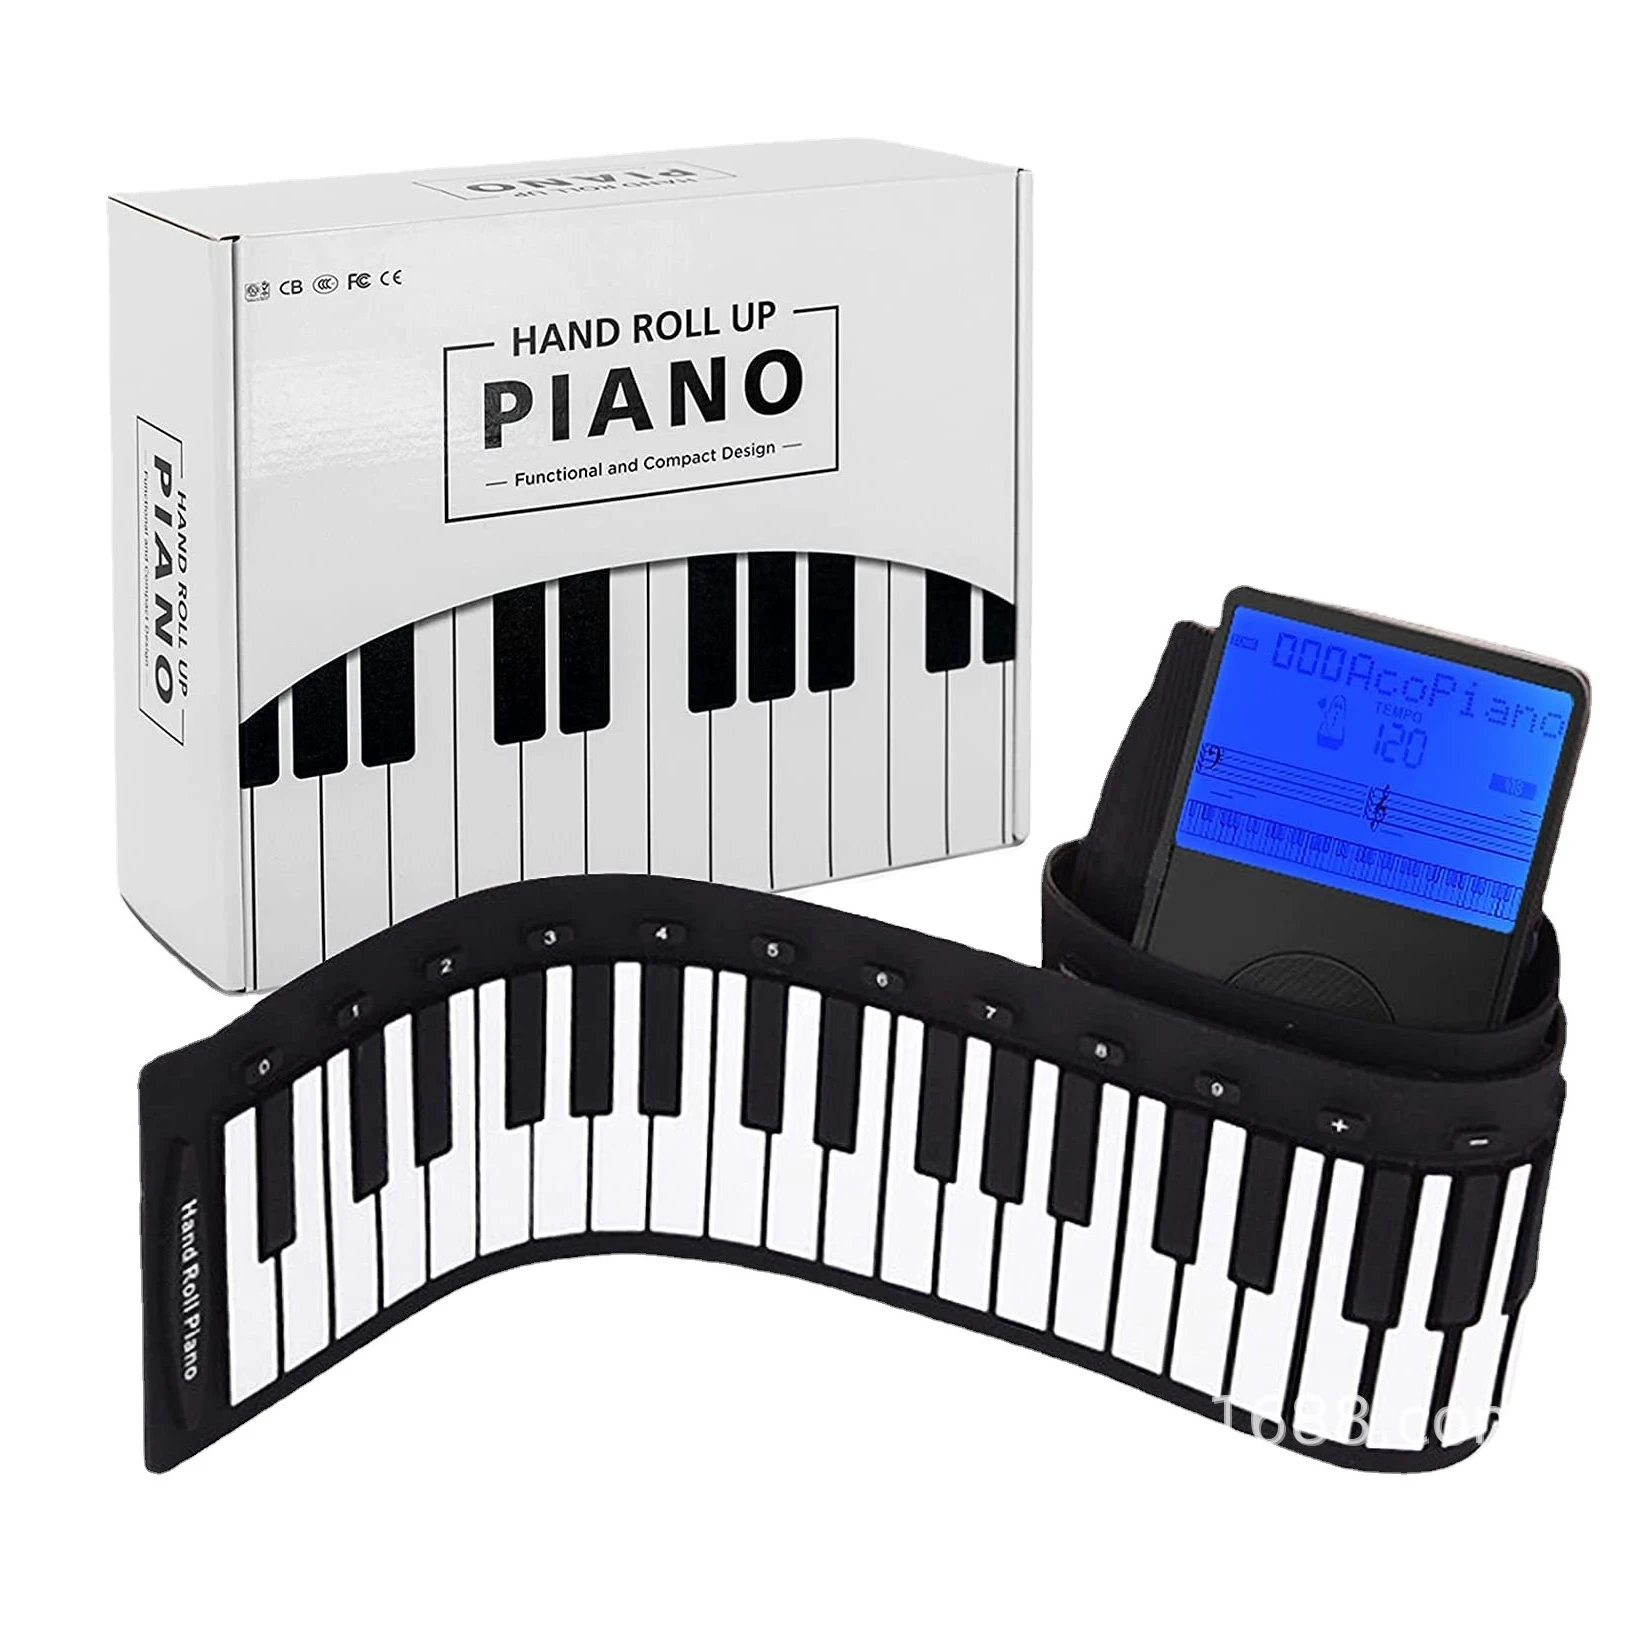 

OriginalHI musical instruments cheap roll up 88 keys digital electronic desktop folding keyboard piano organ